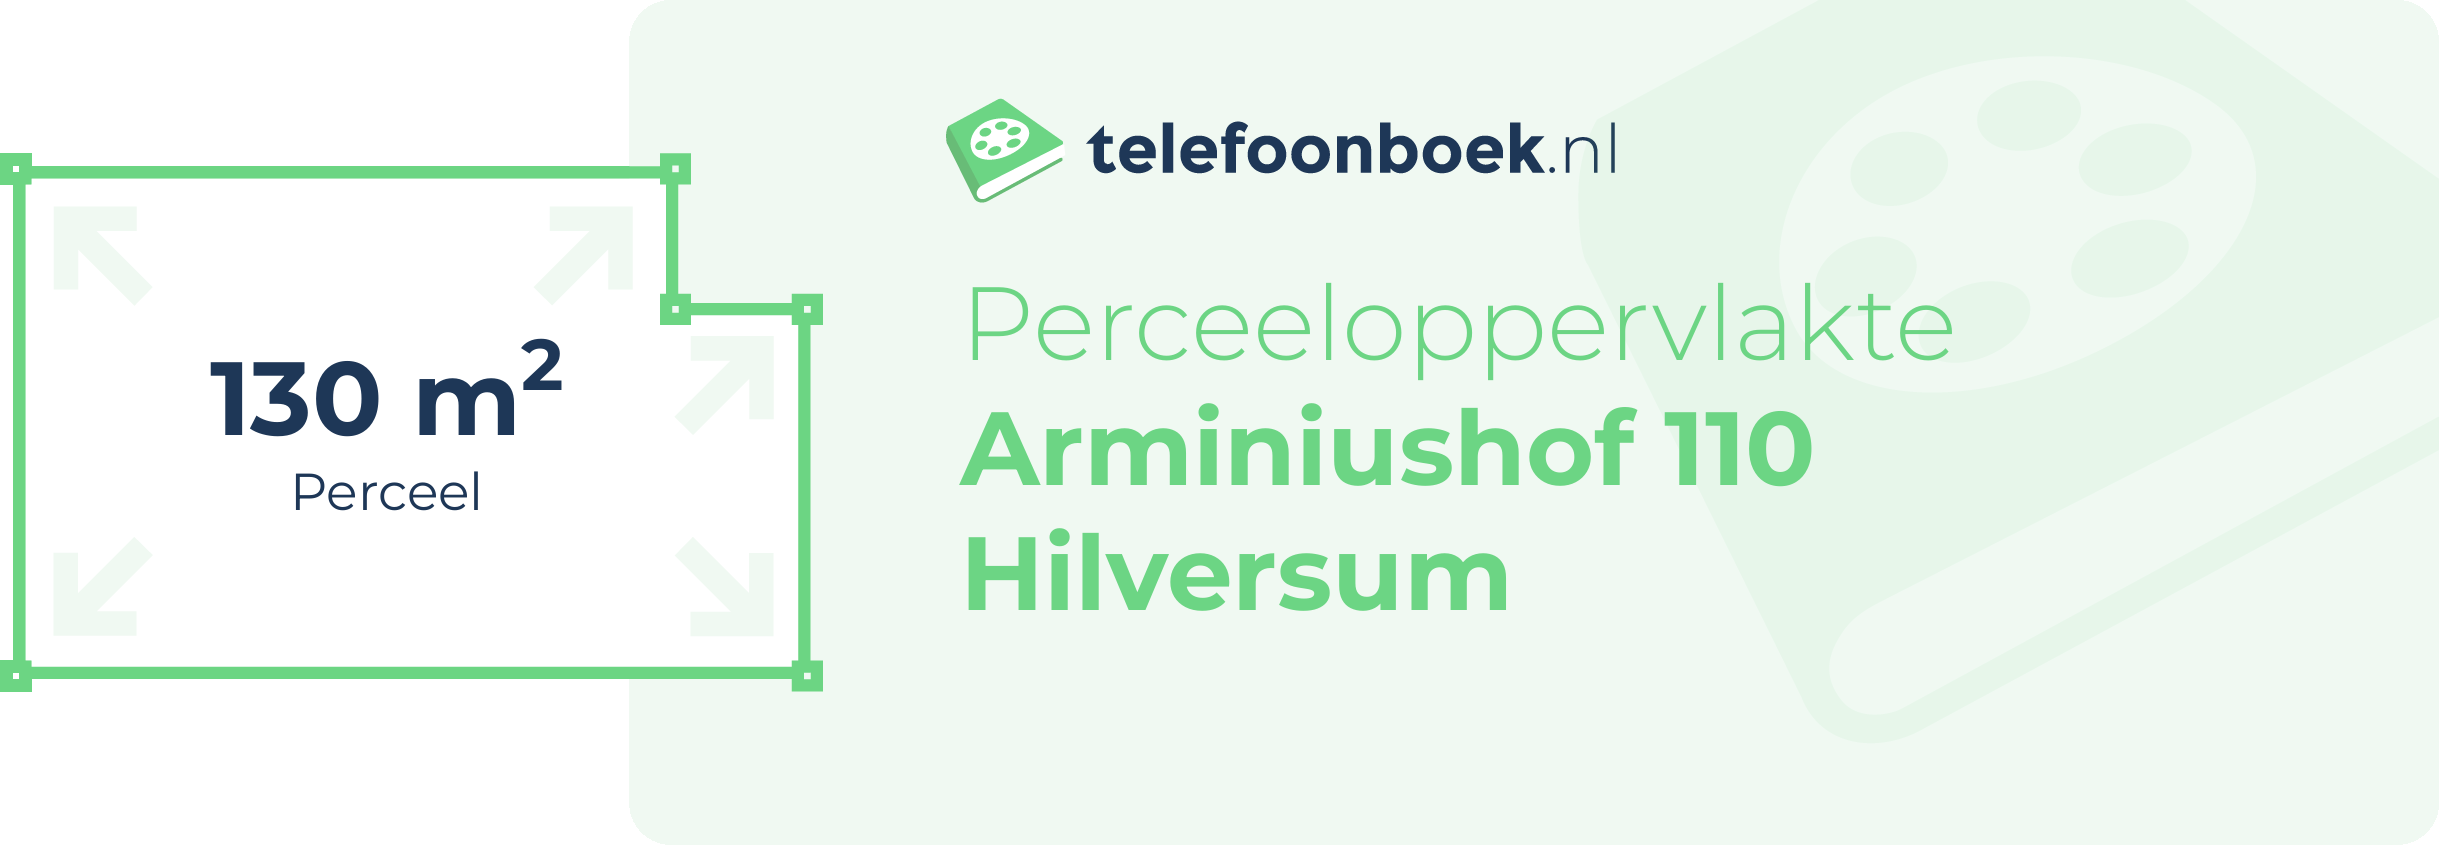 Perceeloppervlakte Arminiushof 110 Hilversum